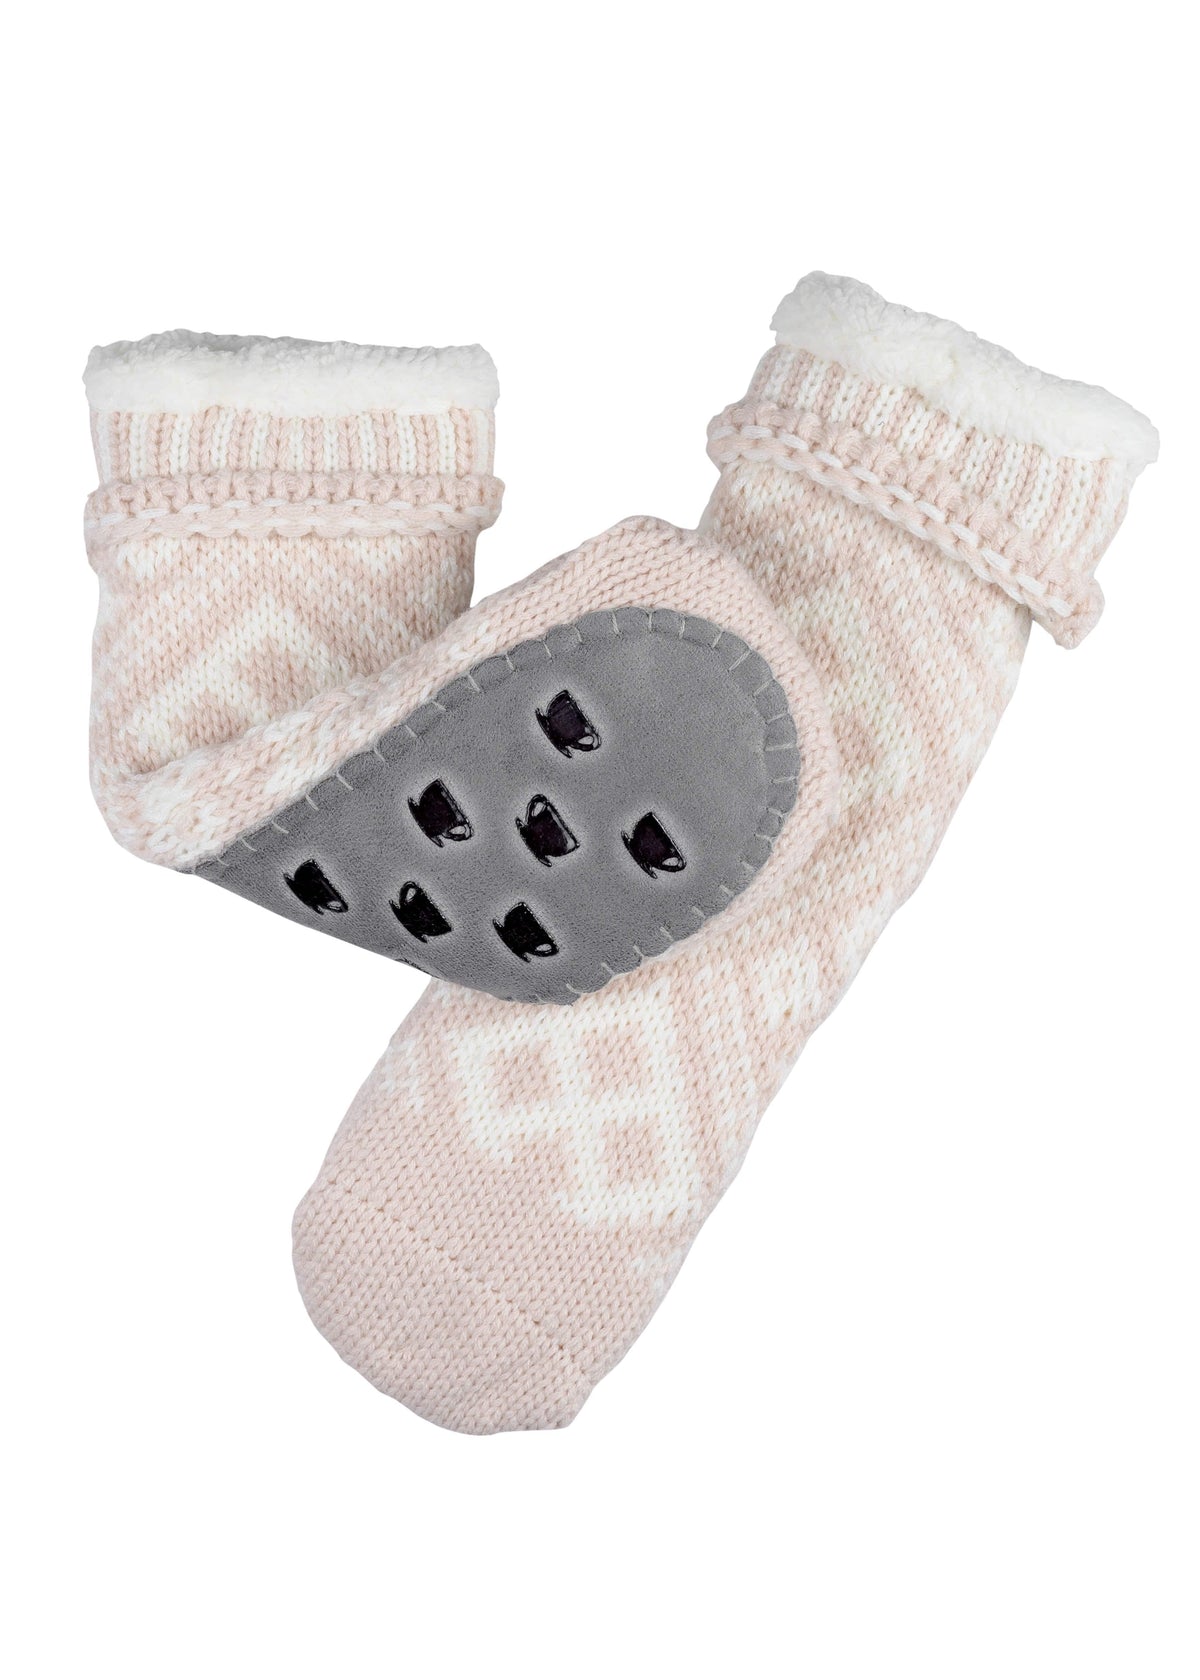 Mukluk Socks - Millennial Pink - LATTELOVE Co.